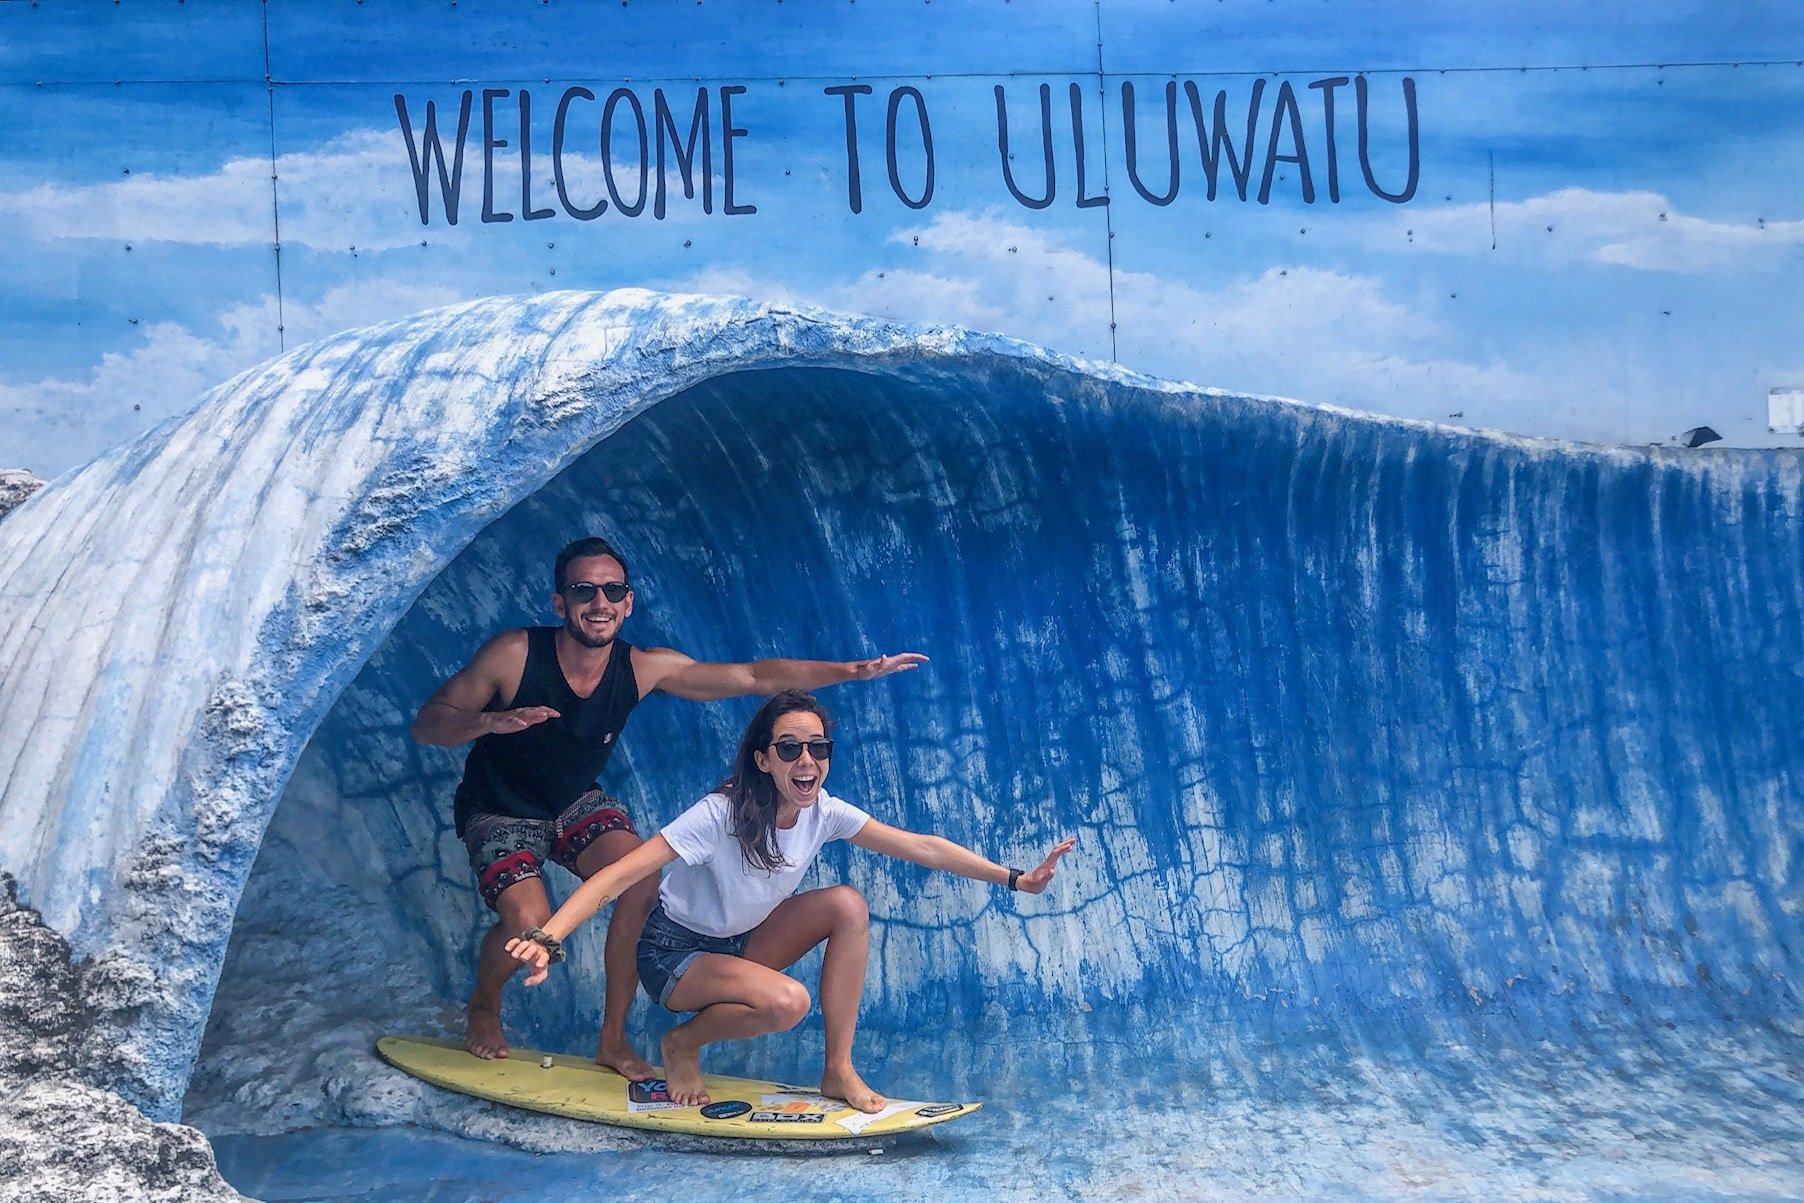 Finding Uluwatu's best surf breaks - The Ungasan